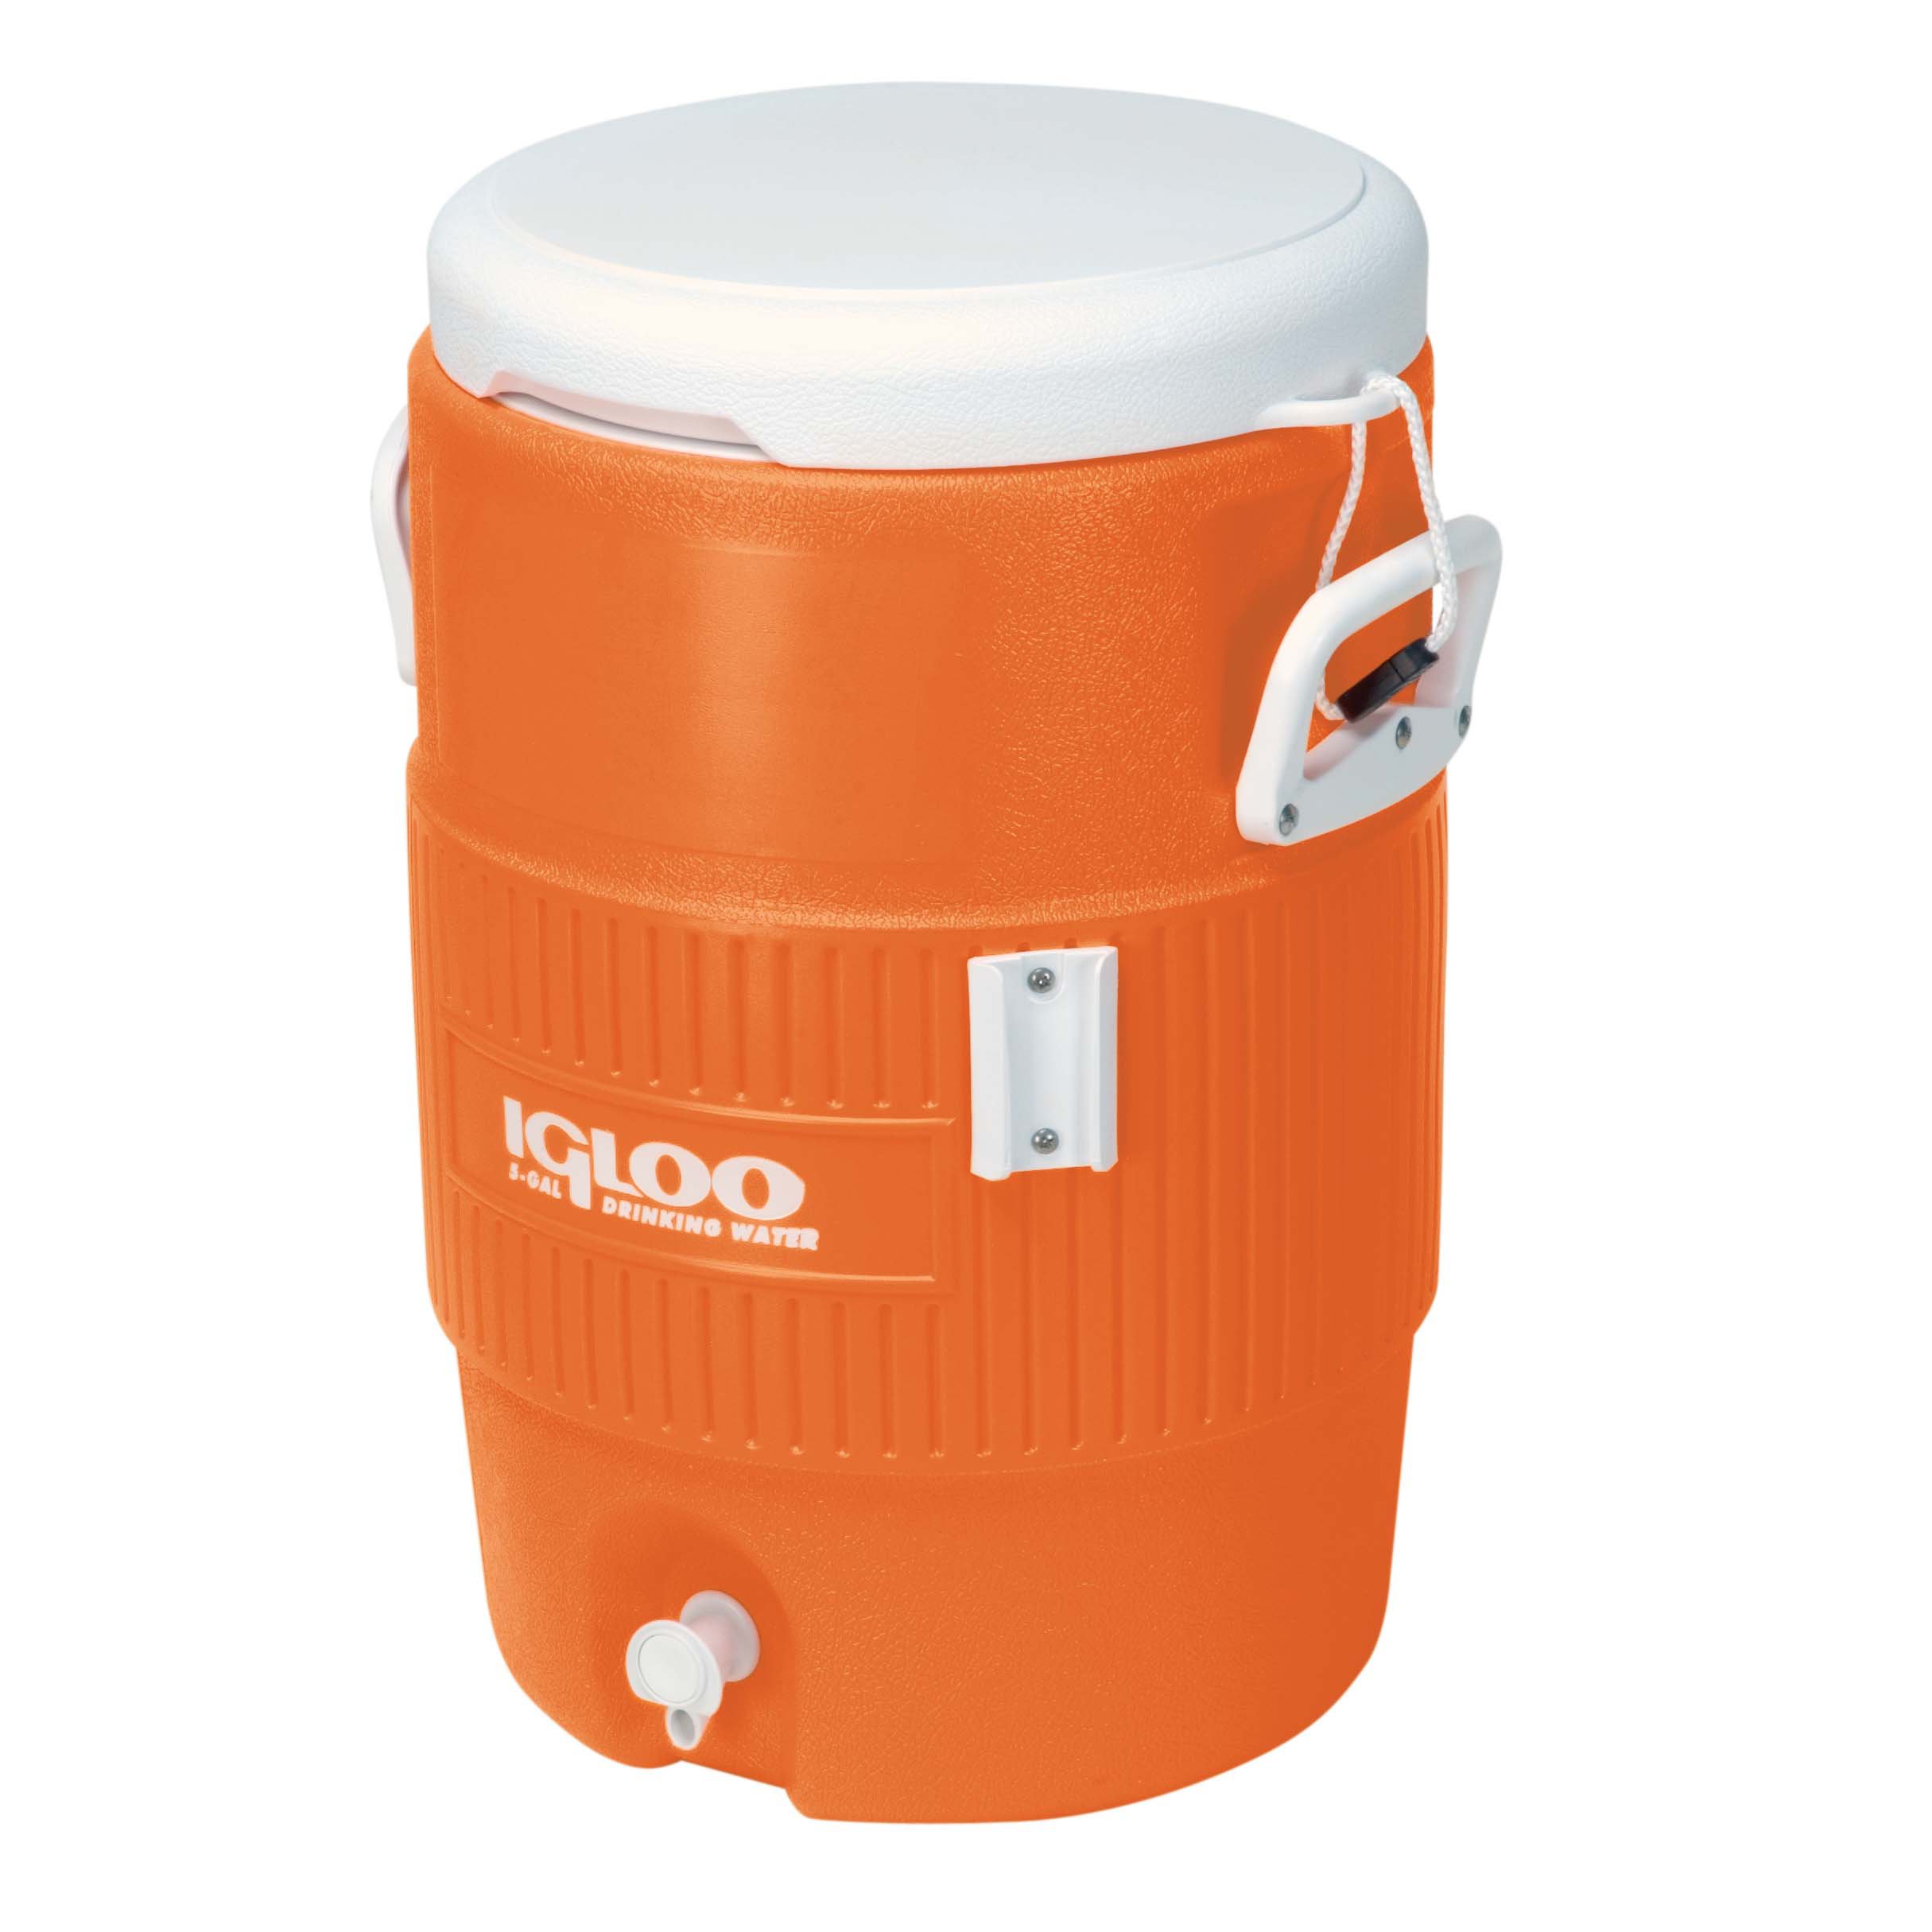 Igloo Industrial Water Cooler | vlr.eng.br